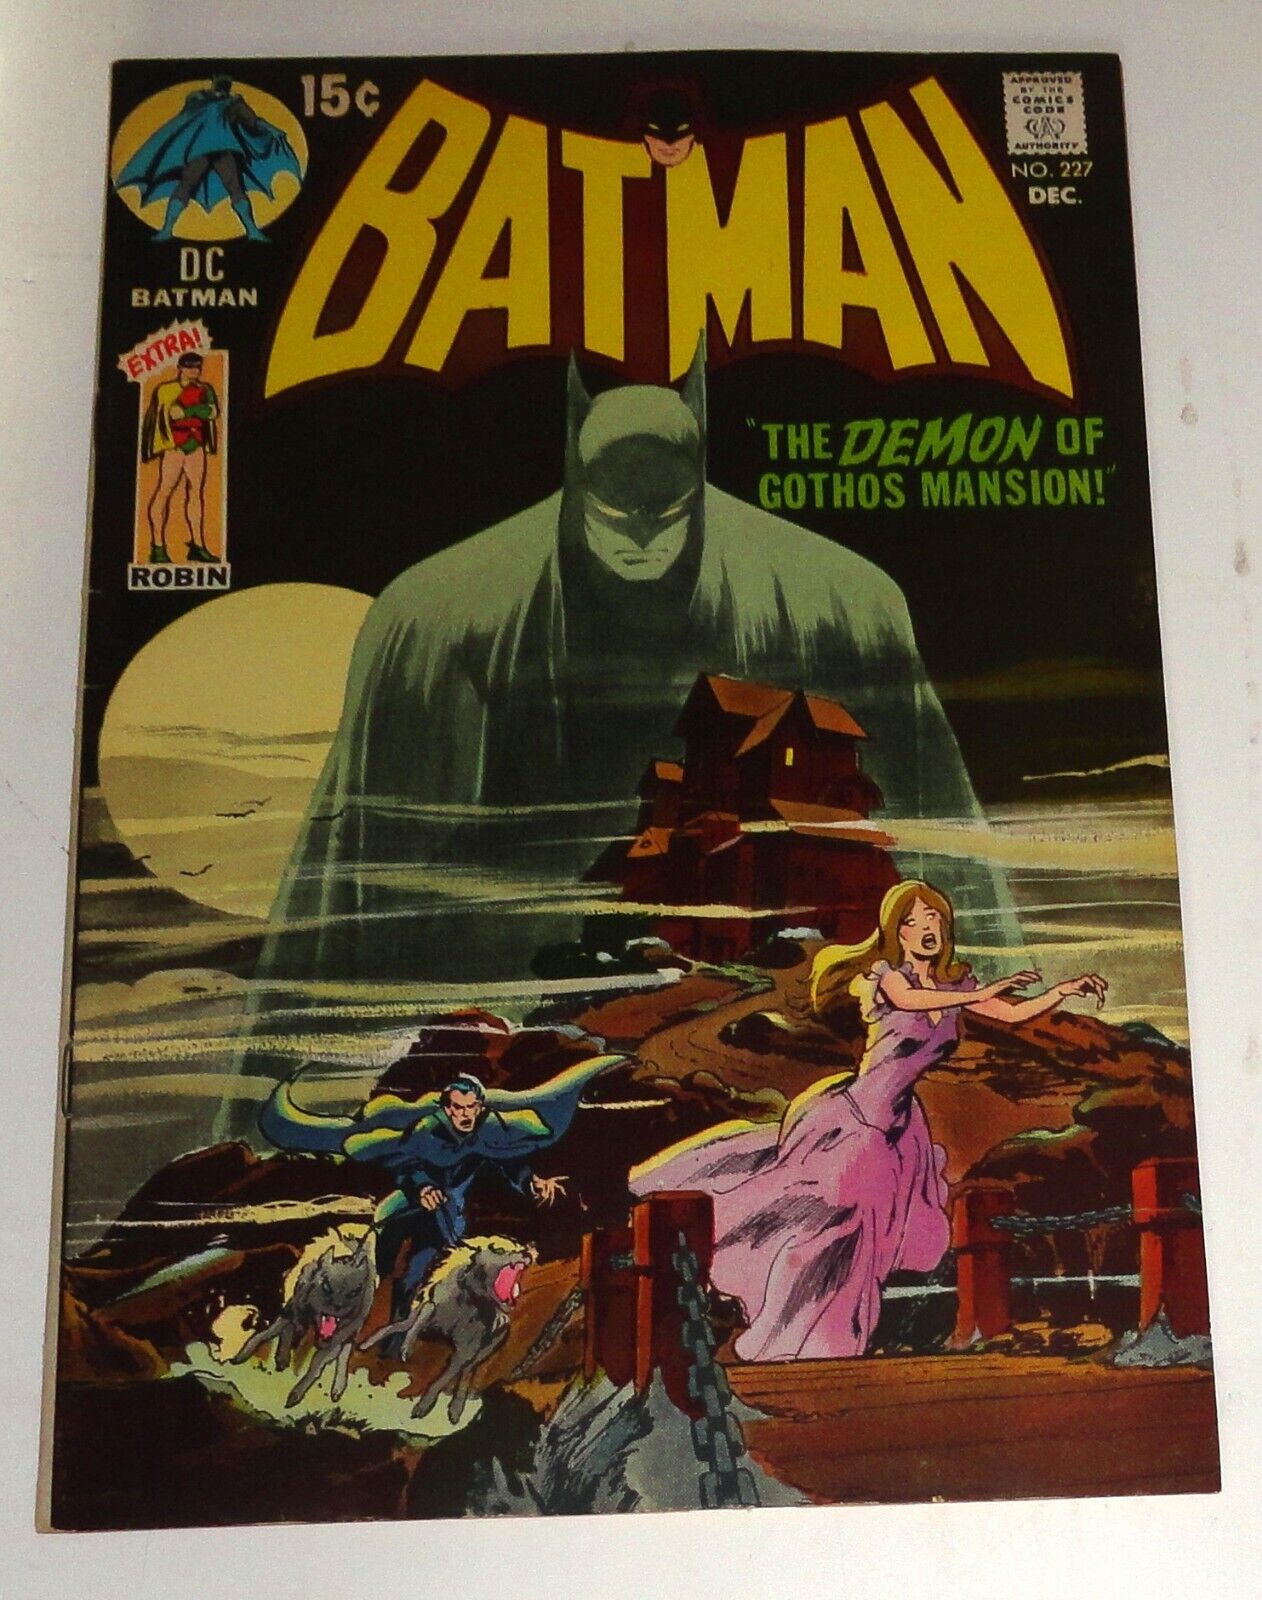 BATMAN #227 CLASSIC NEAL ADAMS COVER VF 8.0 1970 KEY ISSUE